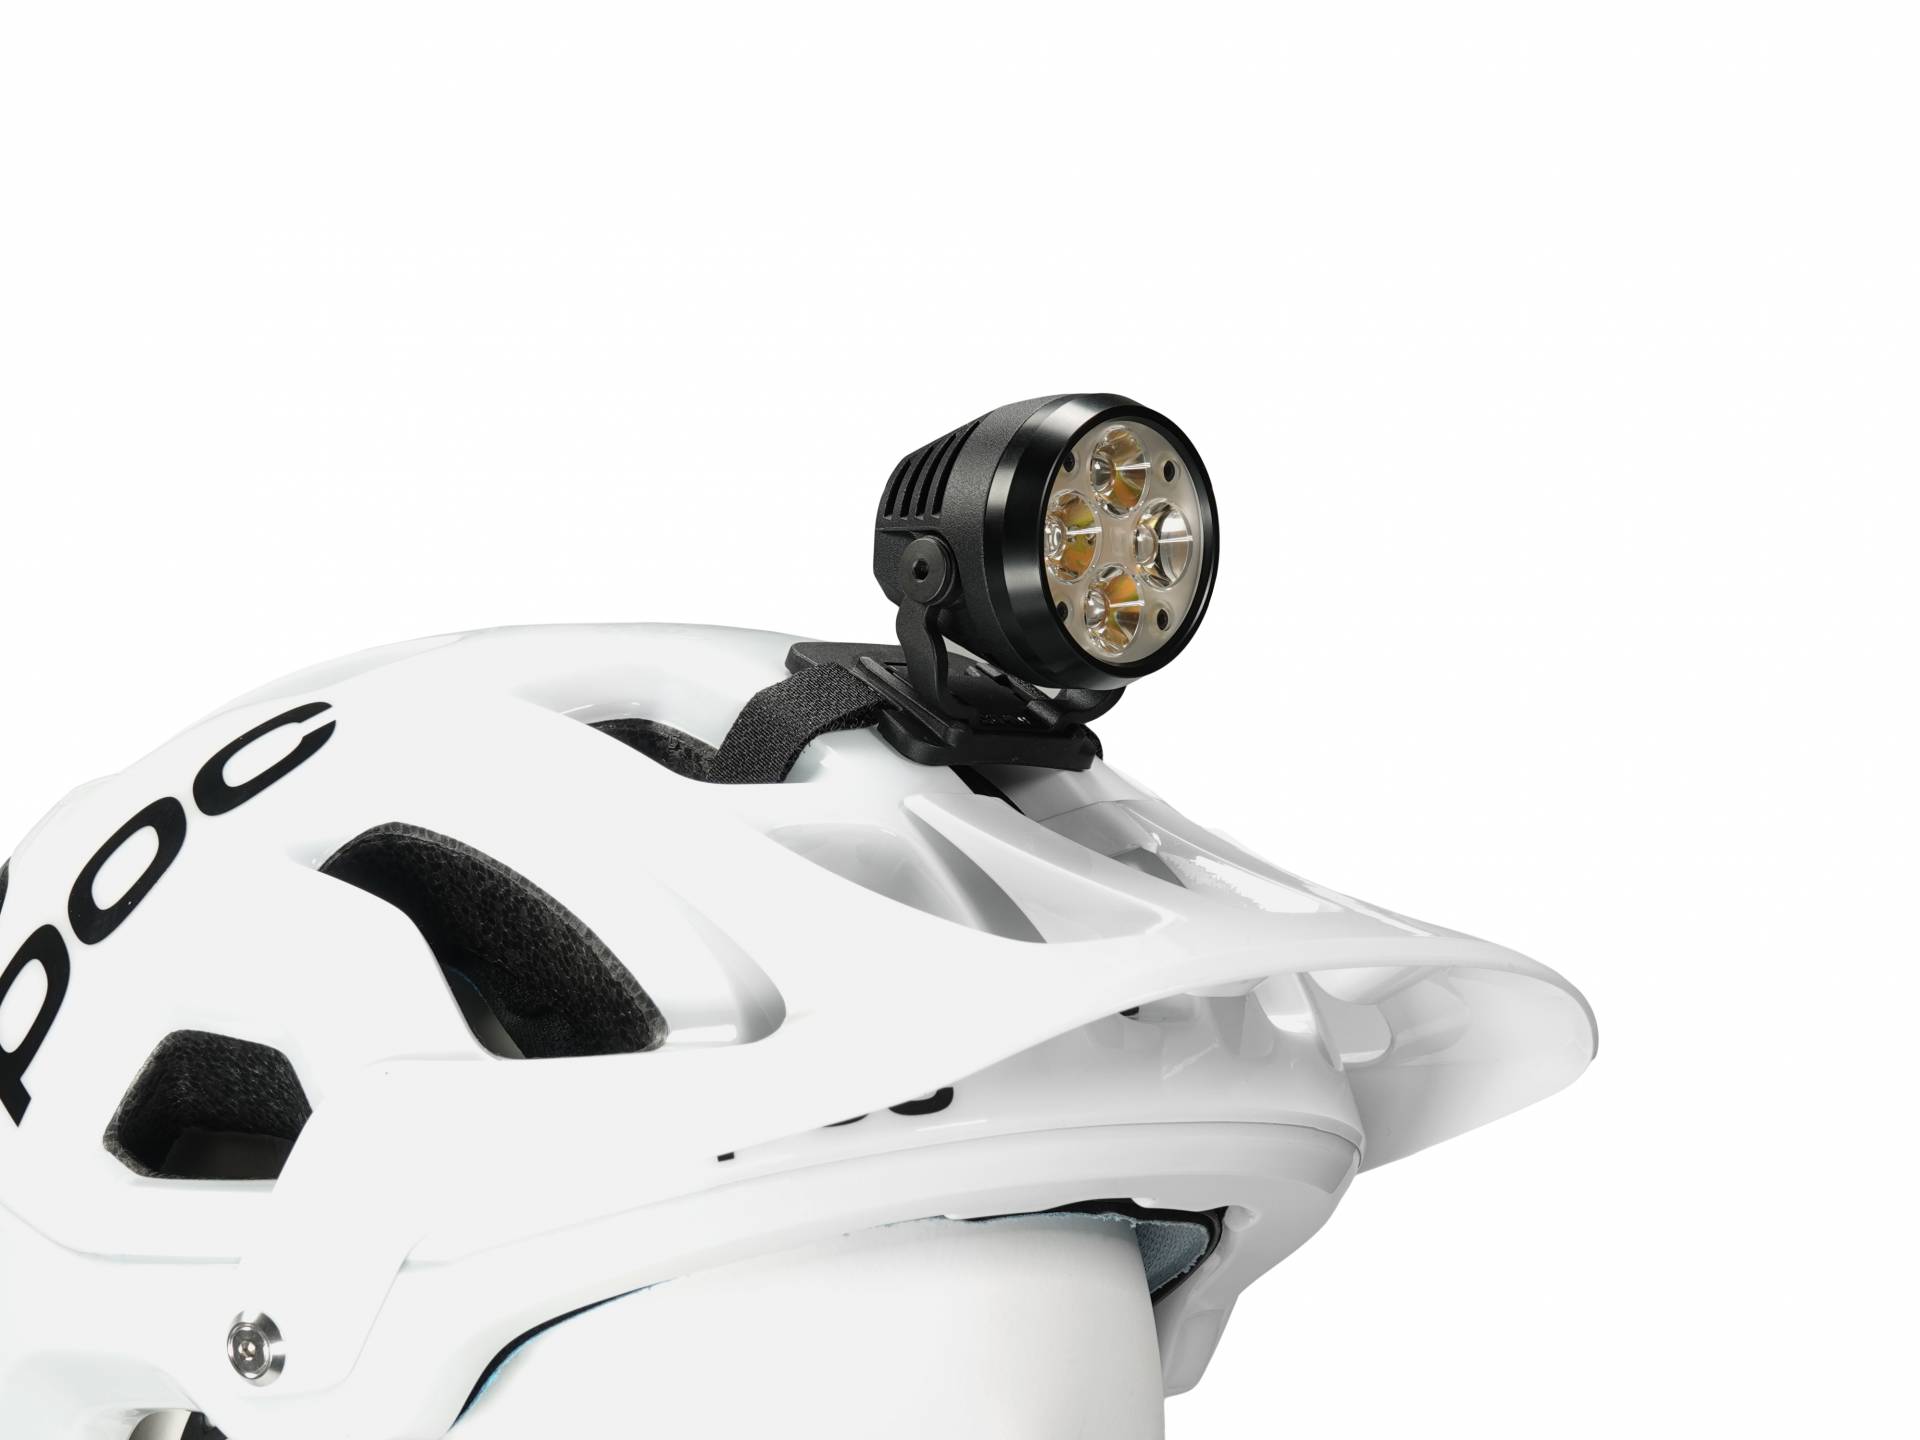 PEARL Fahrradlampe: Akku-Fahrradlicht mit Cree-LED & Lenker-Halter